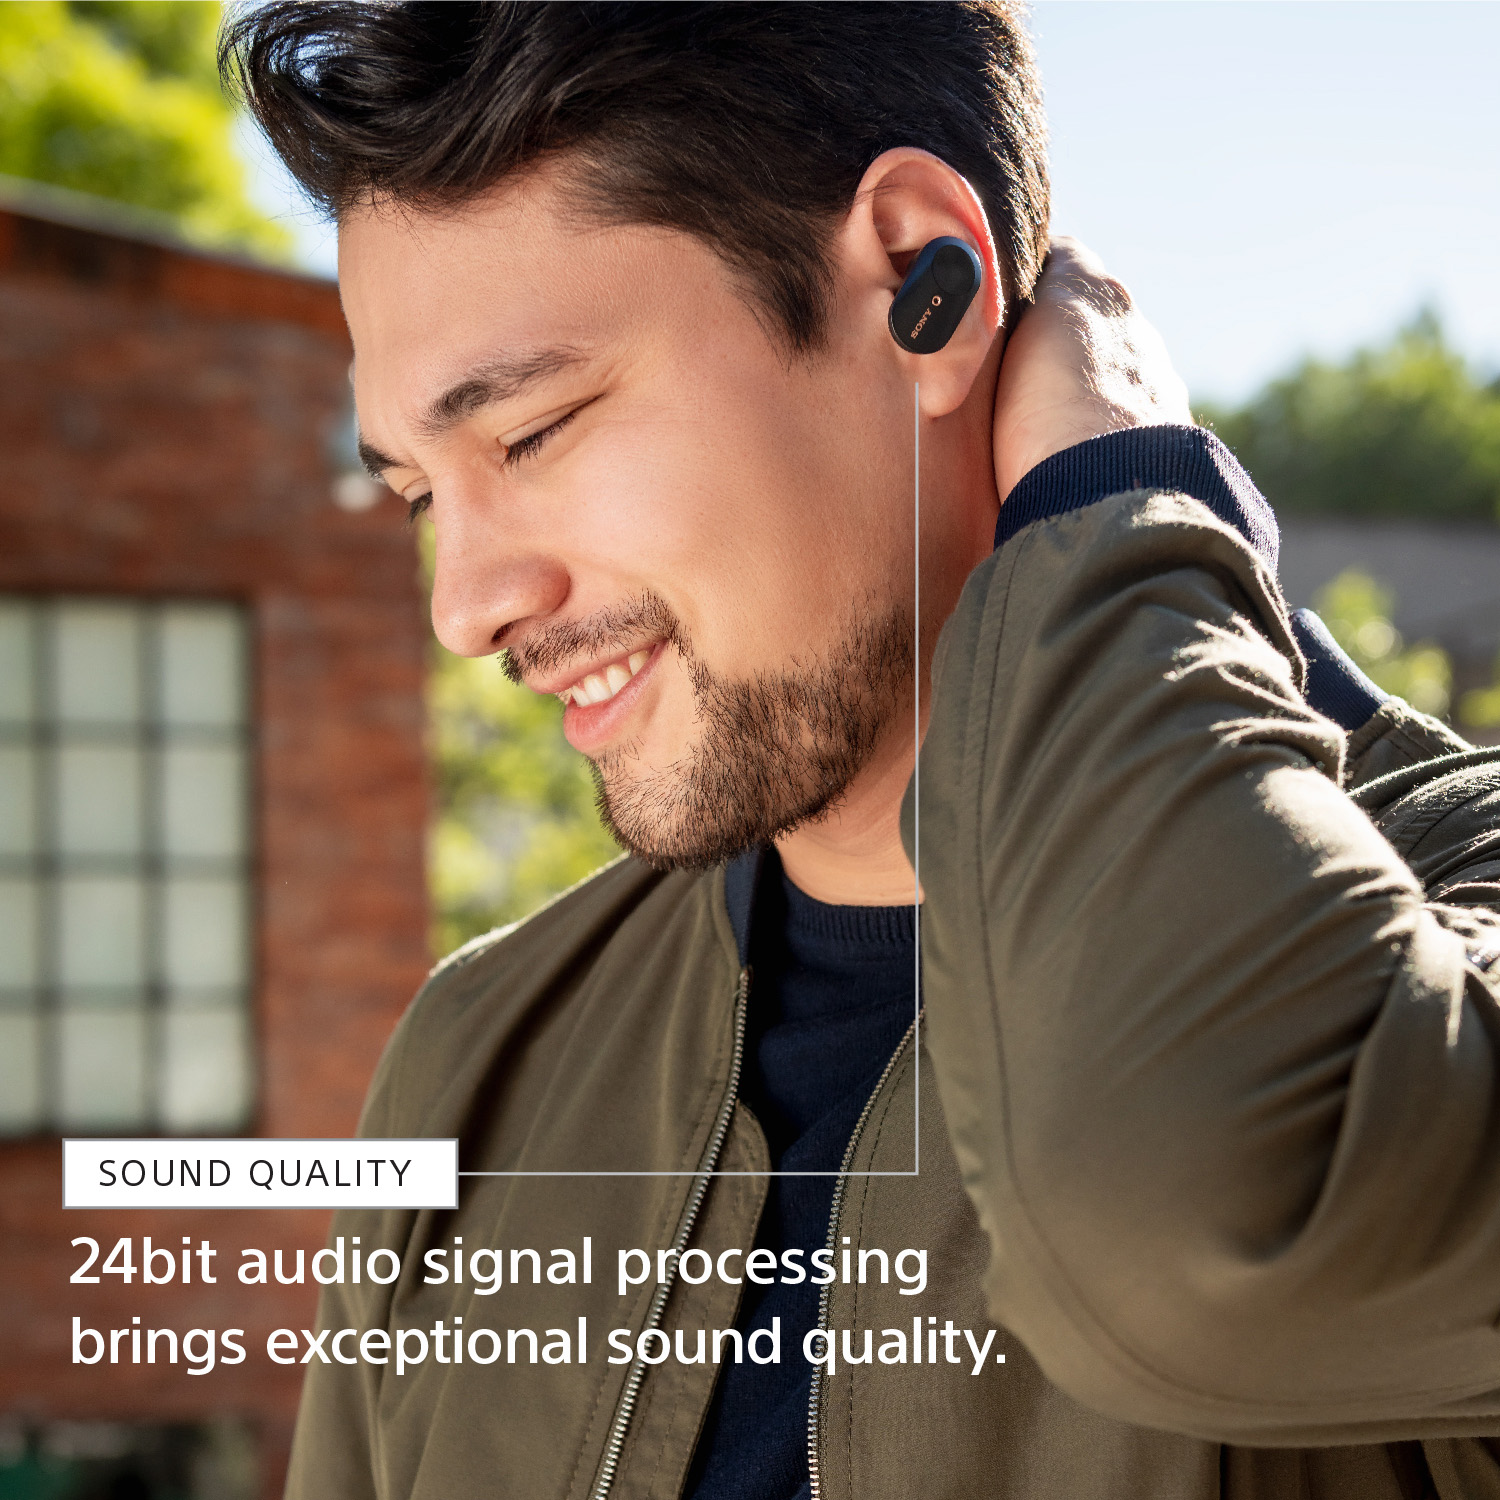 Sony WF-1000XM3 True Wireless Noise-Canceling Bluetooth Wireless Earbuds- Black - image 14 of 16